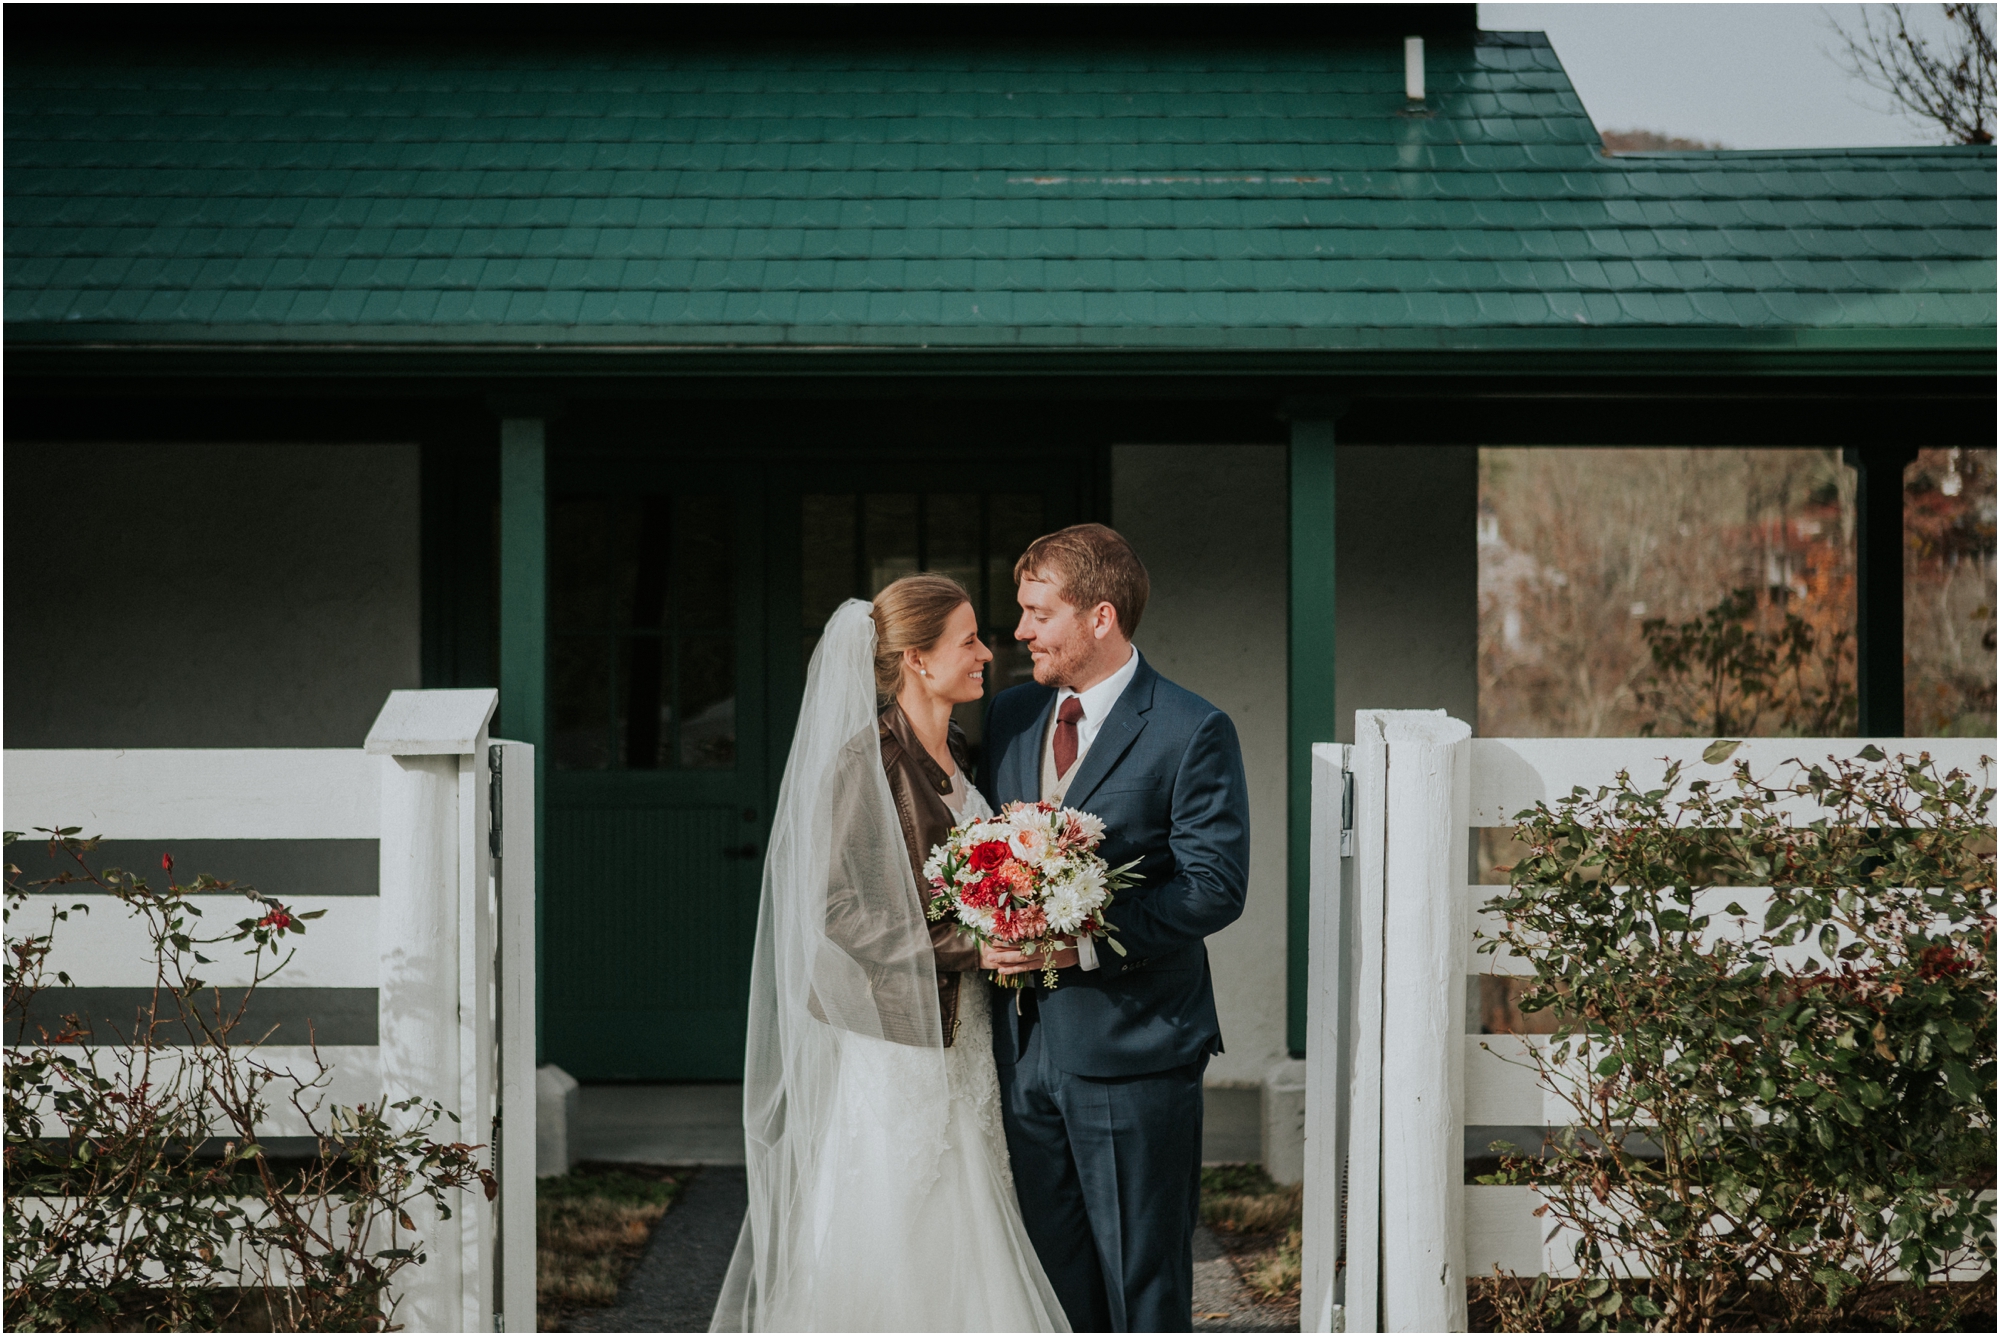 warm-springs-old-dairy-virginia-rustic-wedding-northeast-tennessee-elopement-adventuruous-photographer-katy-sergent_0032.jpg